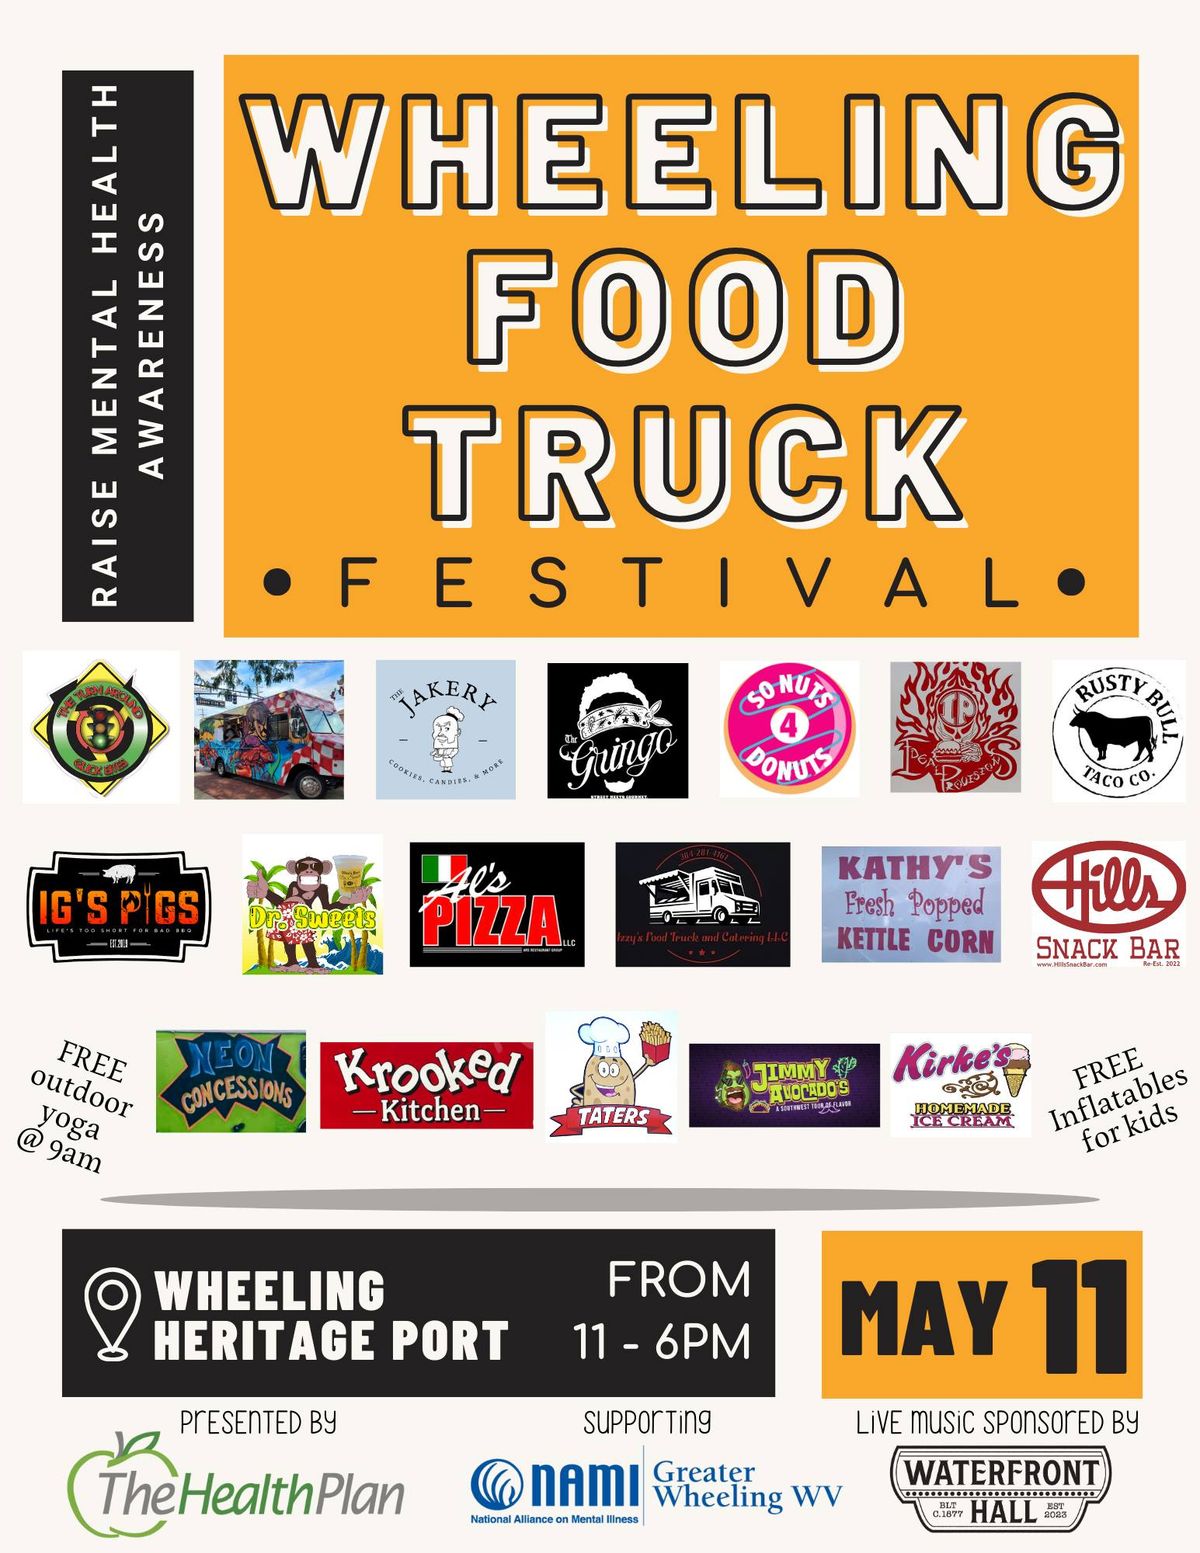 Wheeling Food Truck Festival presented by The Health Plan Sponsoring NAMI Greater Wheeling